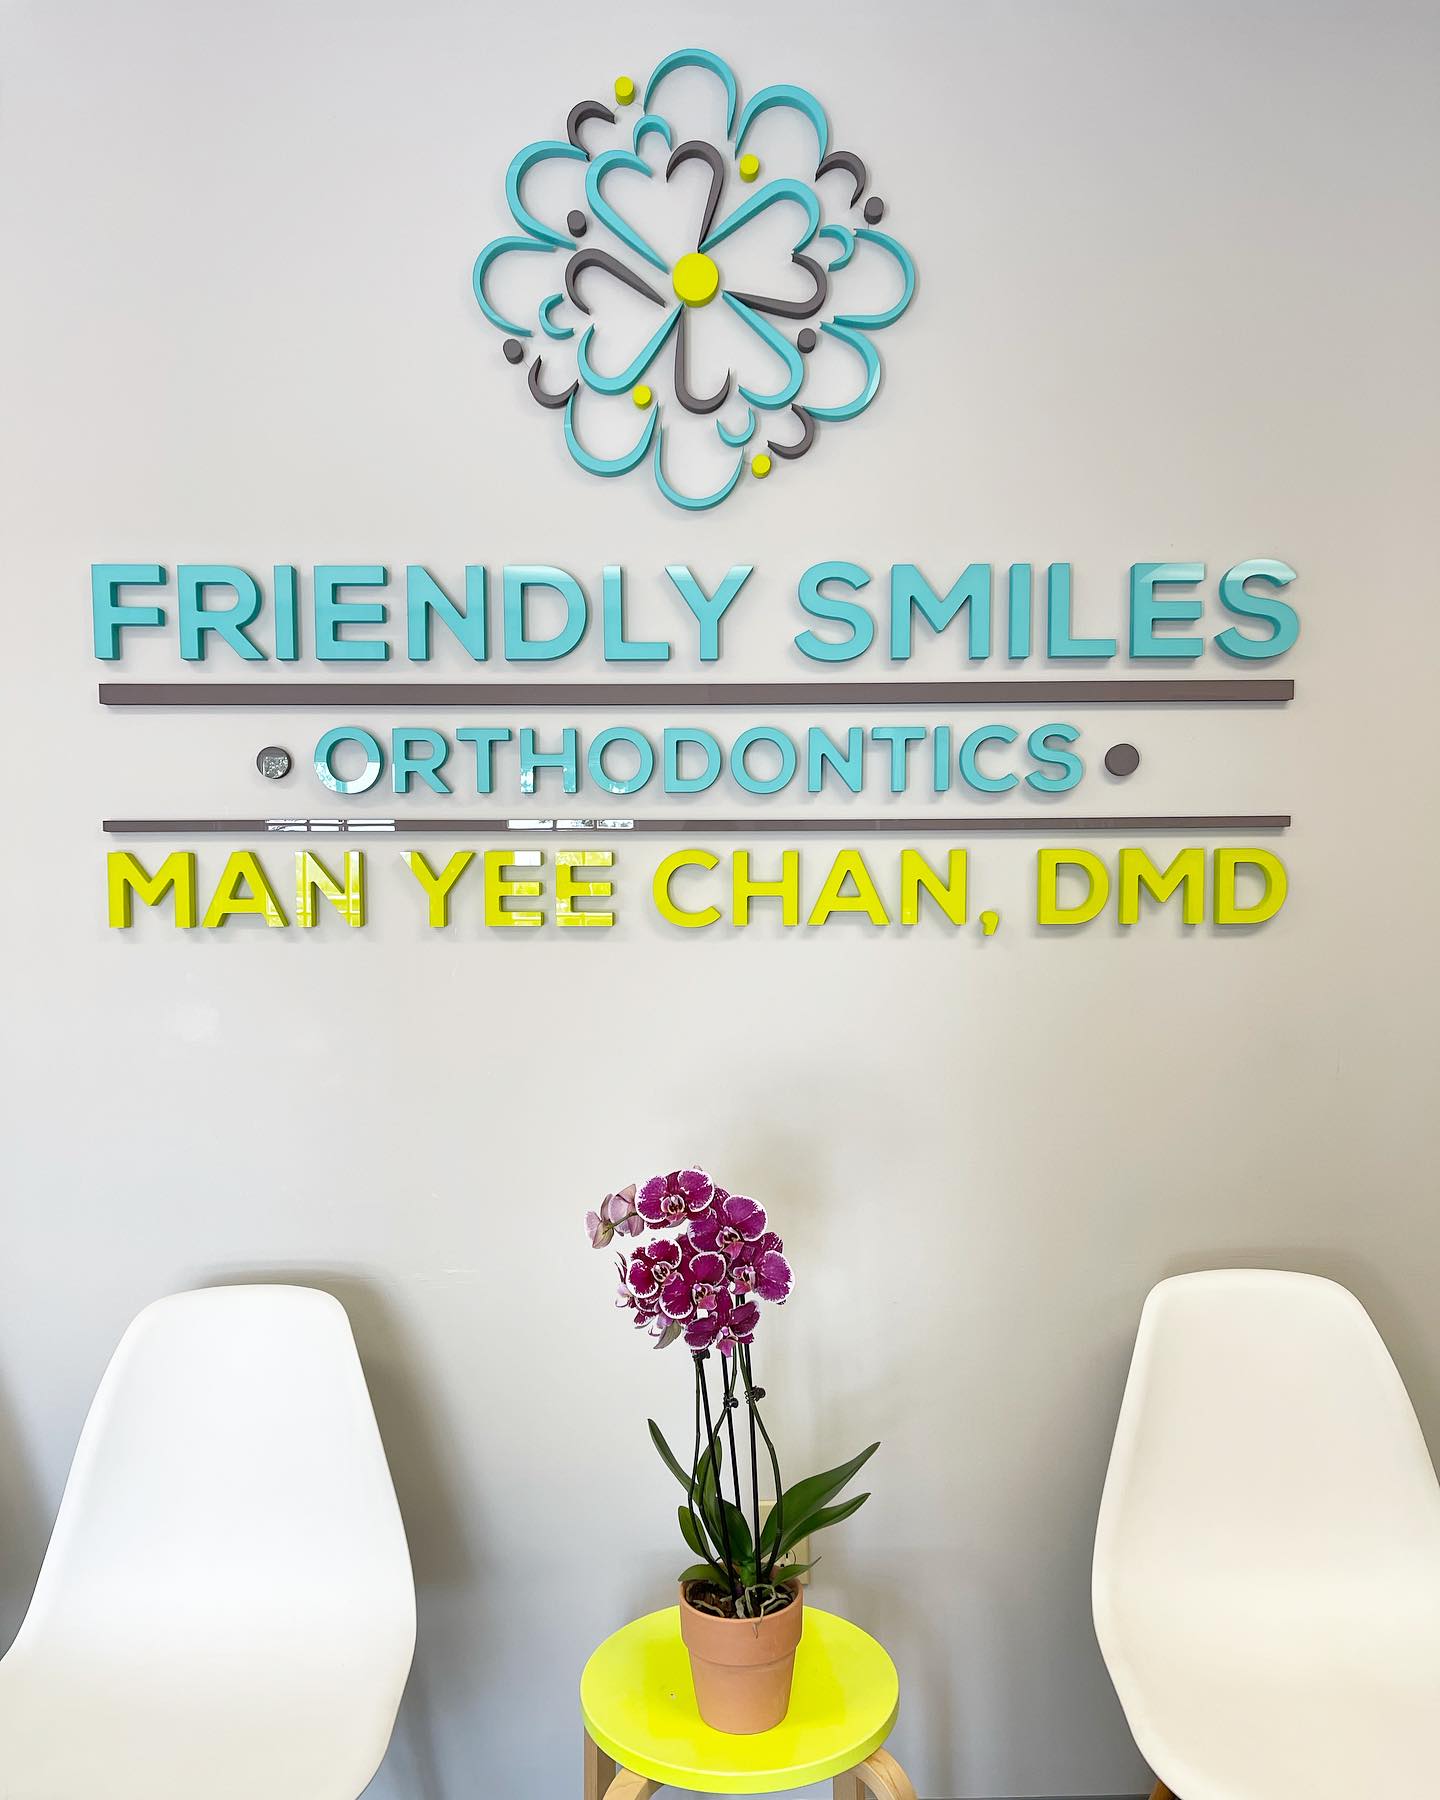 Meet Dr. Man Yee Chan